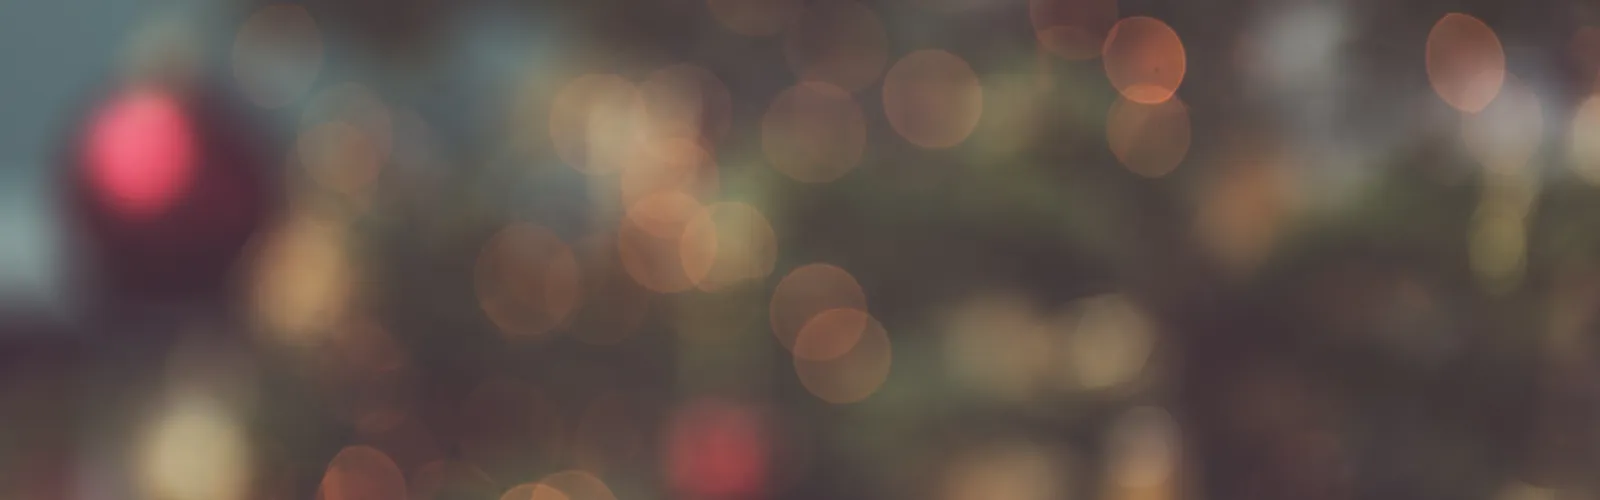 Blurred Christmas lights on evergreen tree